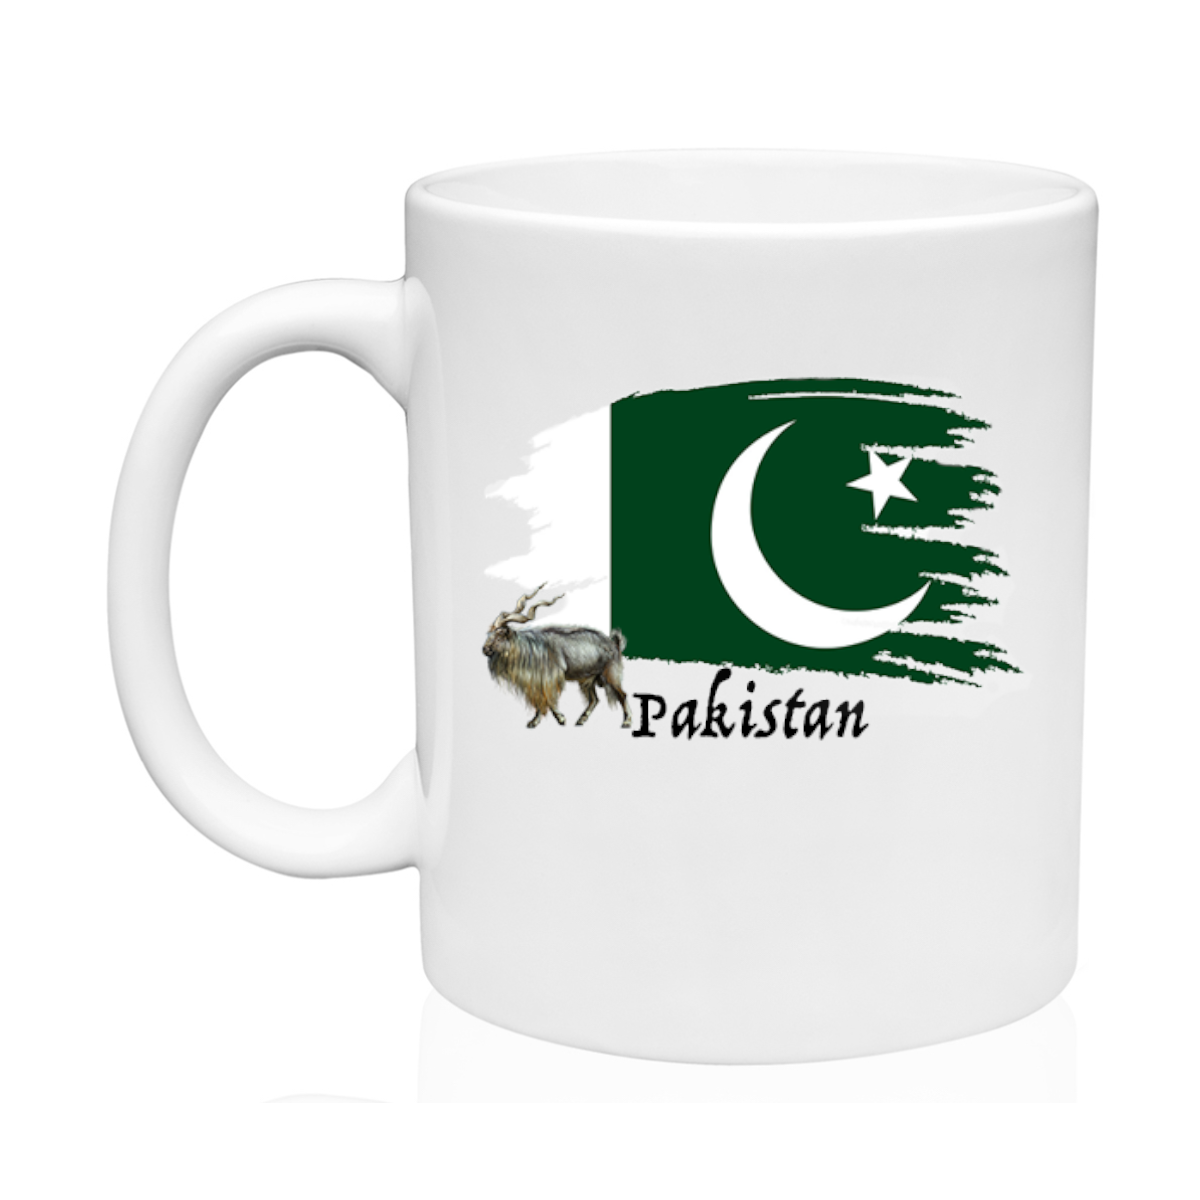 AGAD Turista (I Love Pakistan Ceramic Mug)